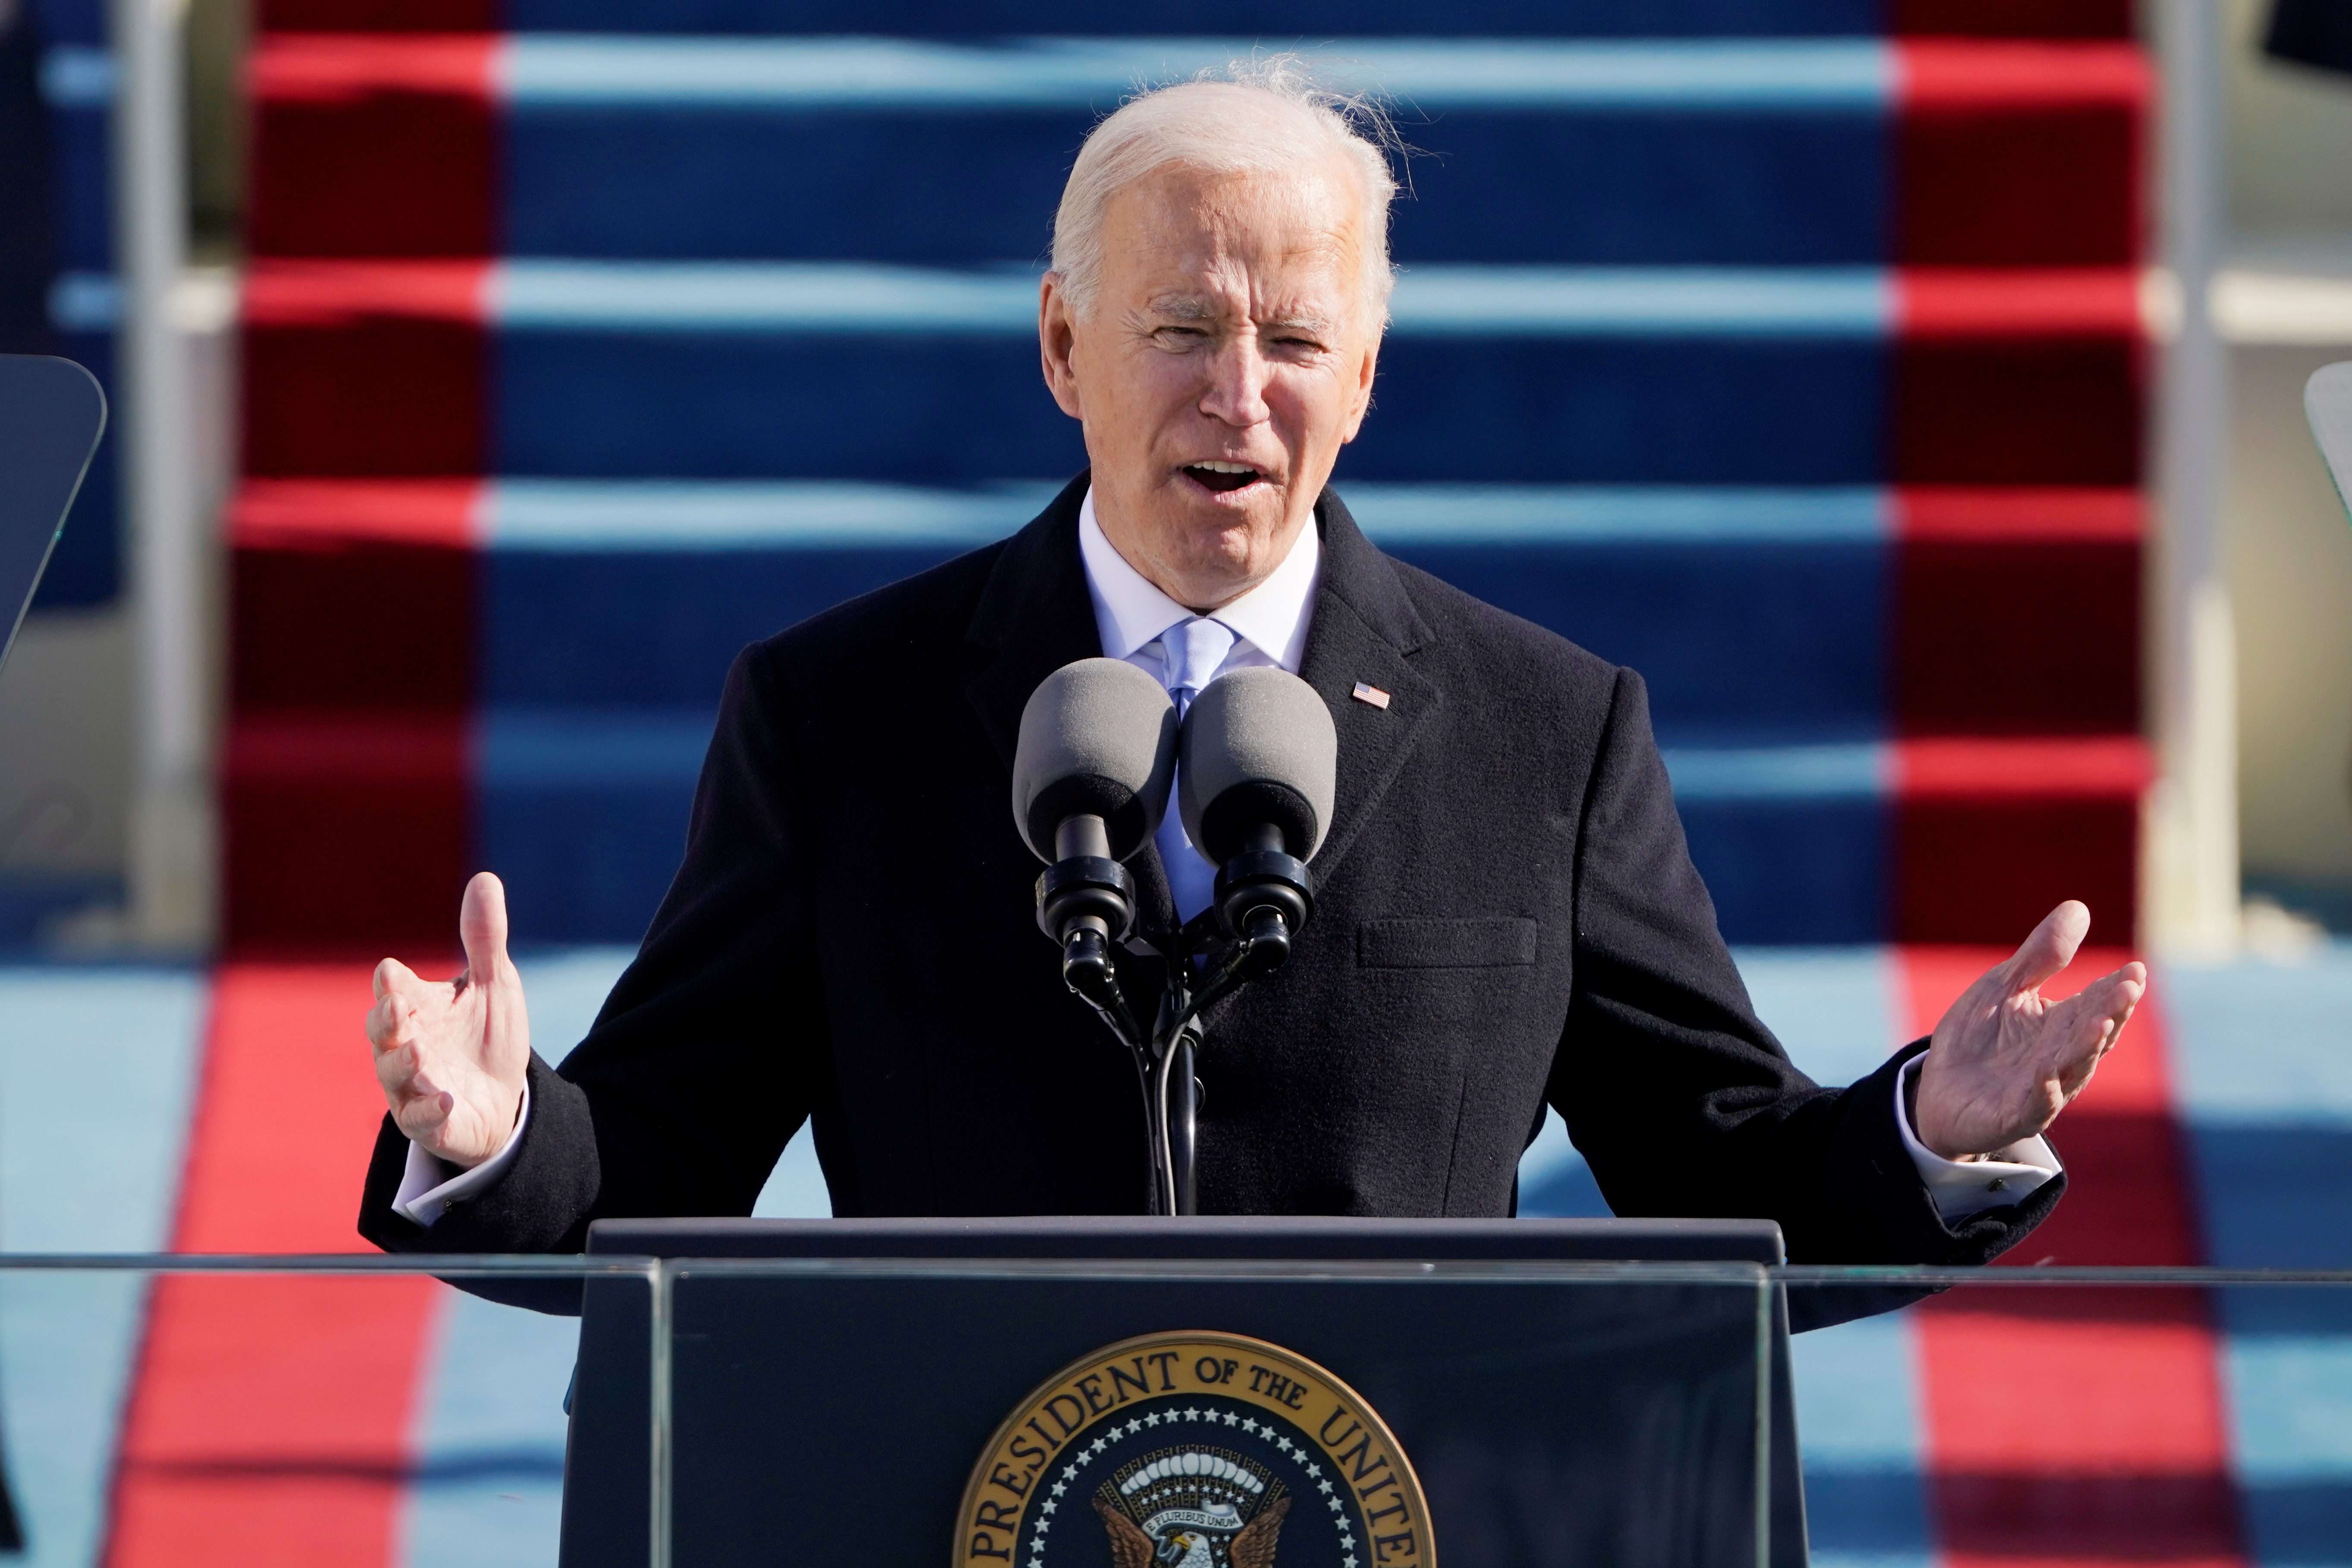 FULL TEXT AND VIDEO: Inaugural speech of US President Joe Biden